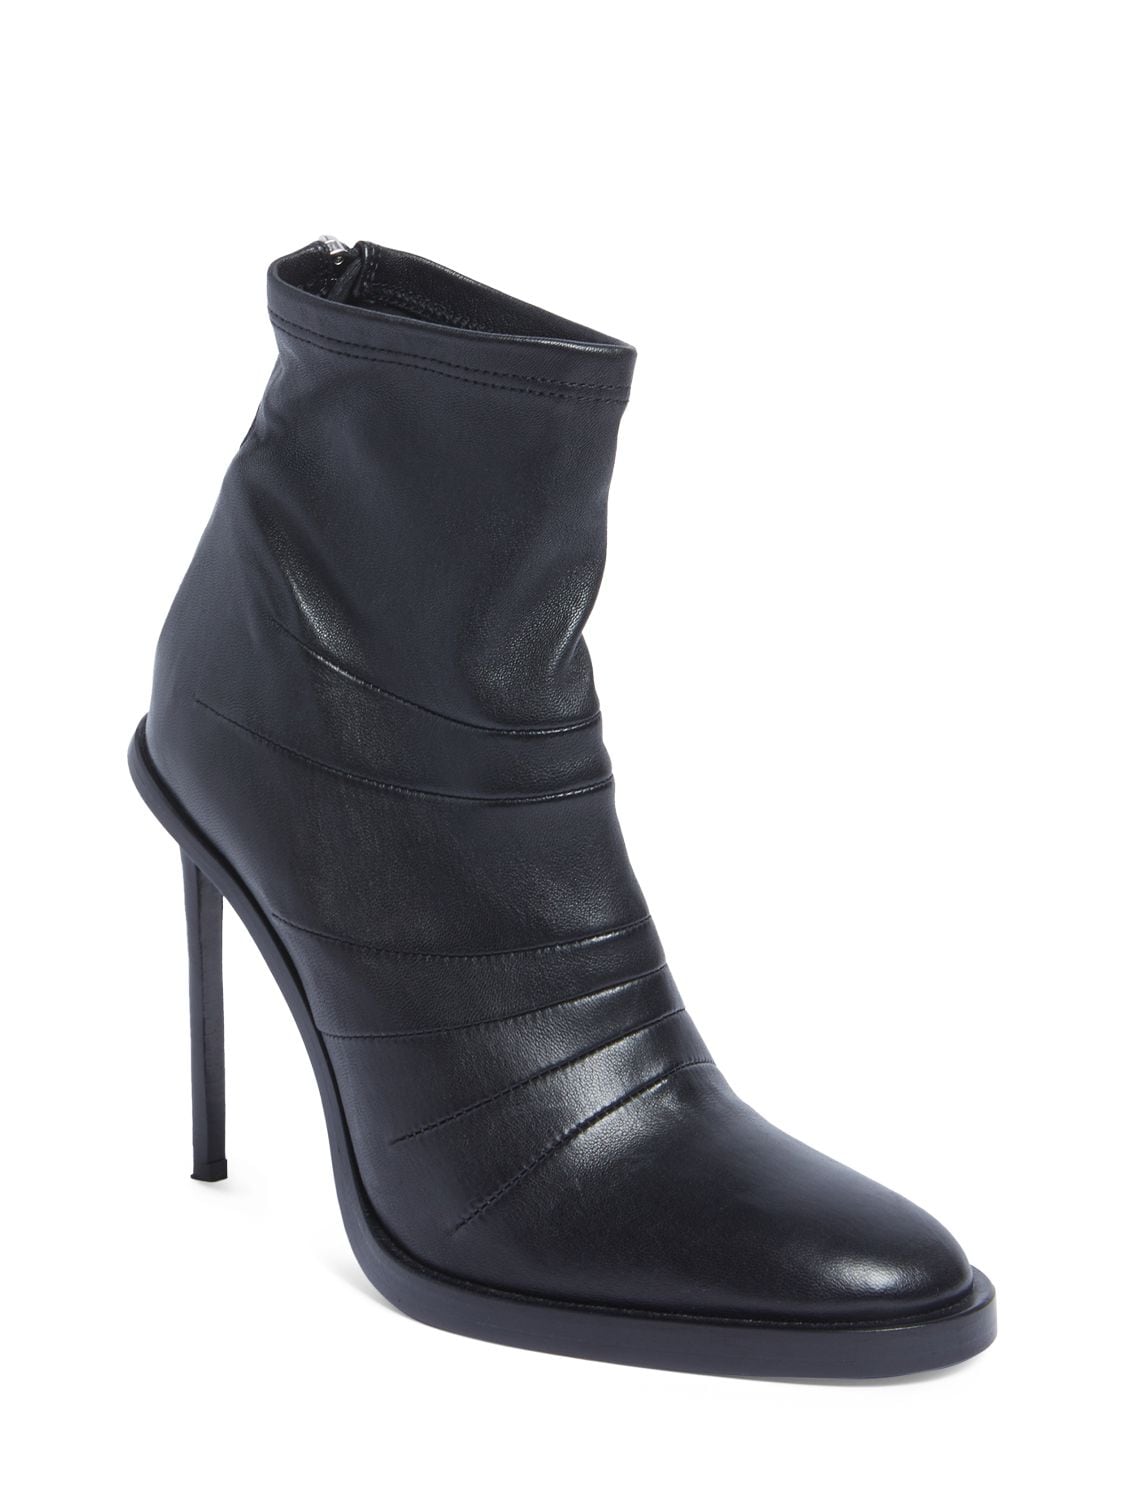 Shop Ann Demeulemeester 110mm Carol High Heel Ankle Boots In Black